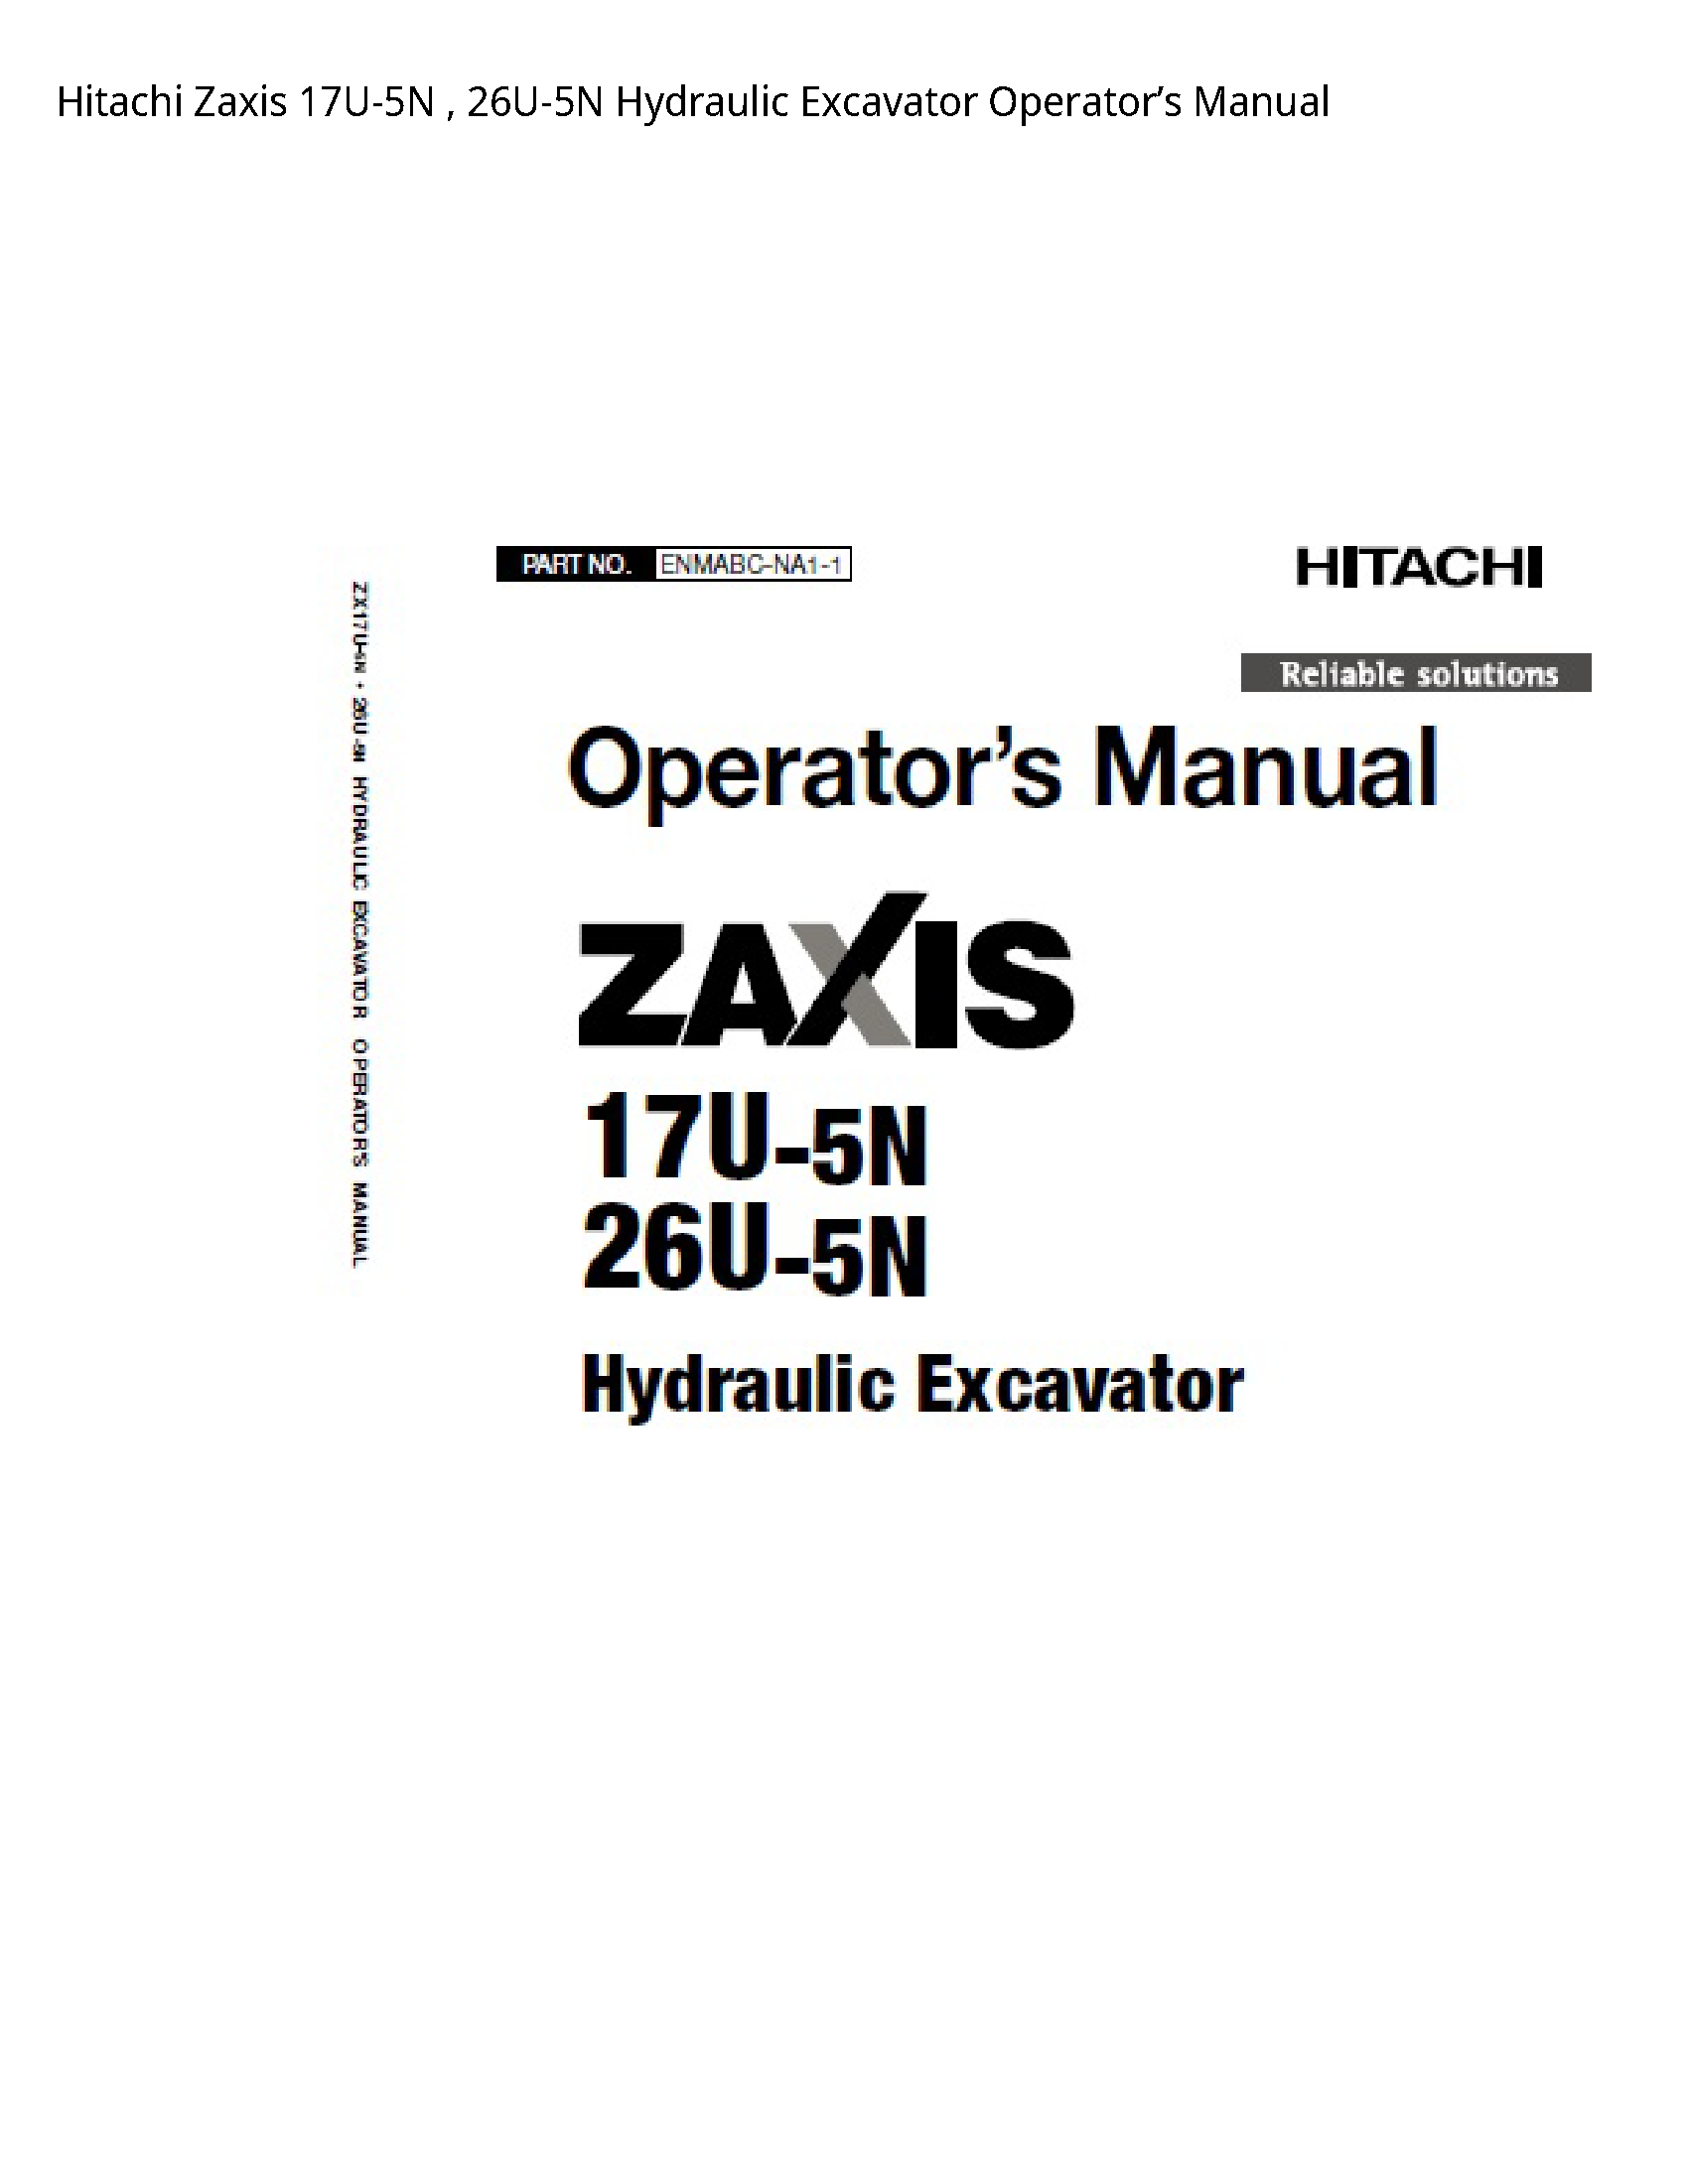 Hitachi 17U-5N Zaxis Hydraulic Excavator Operator’s manual